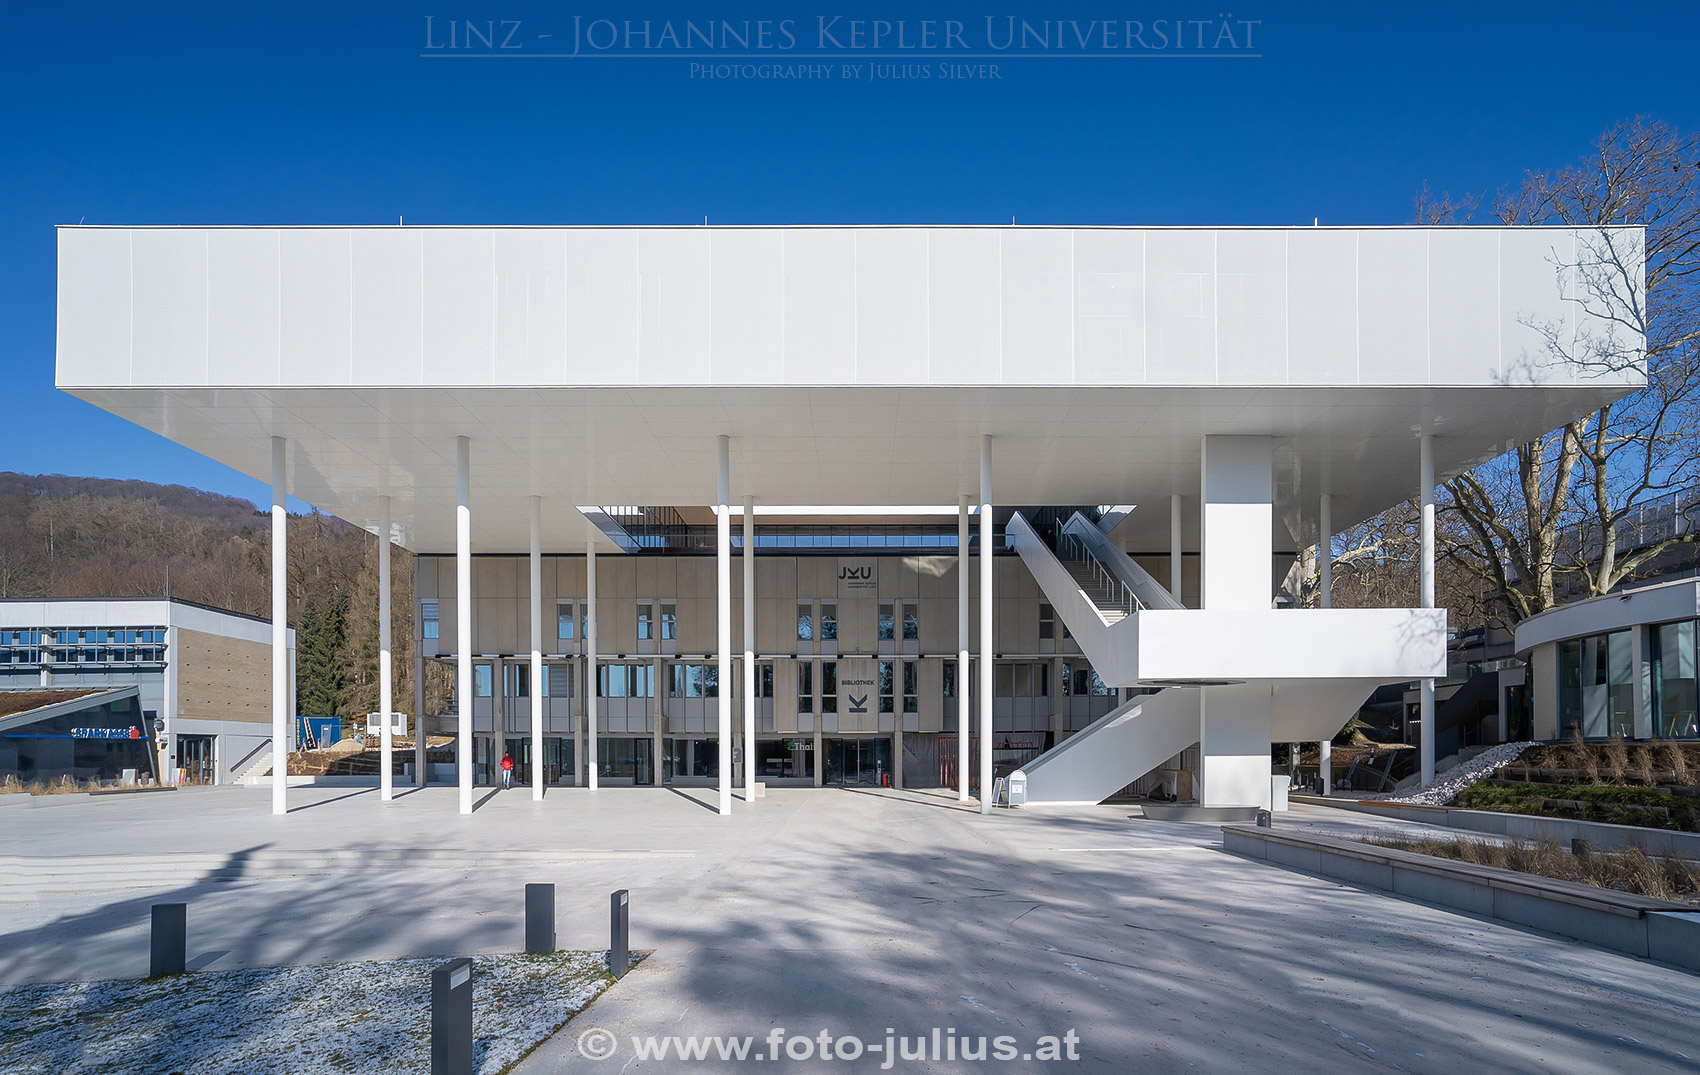 Linz_122a_Johannes_Kepler_Universitat.jpg, 461kB